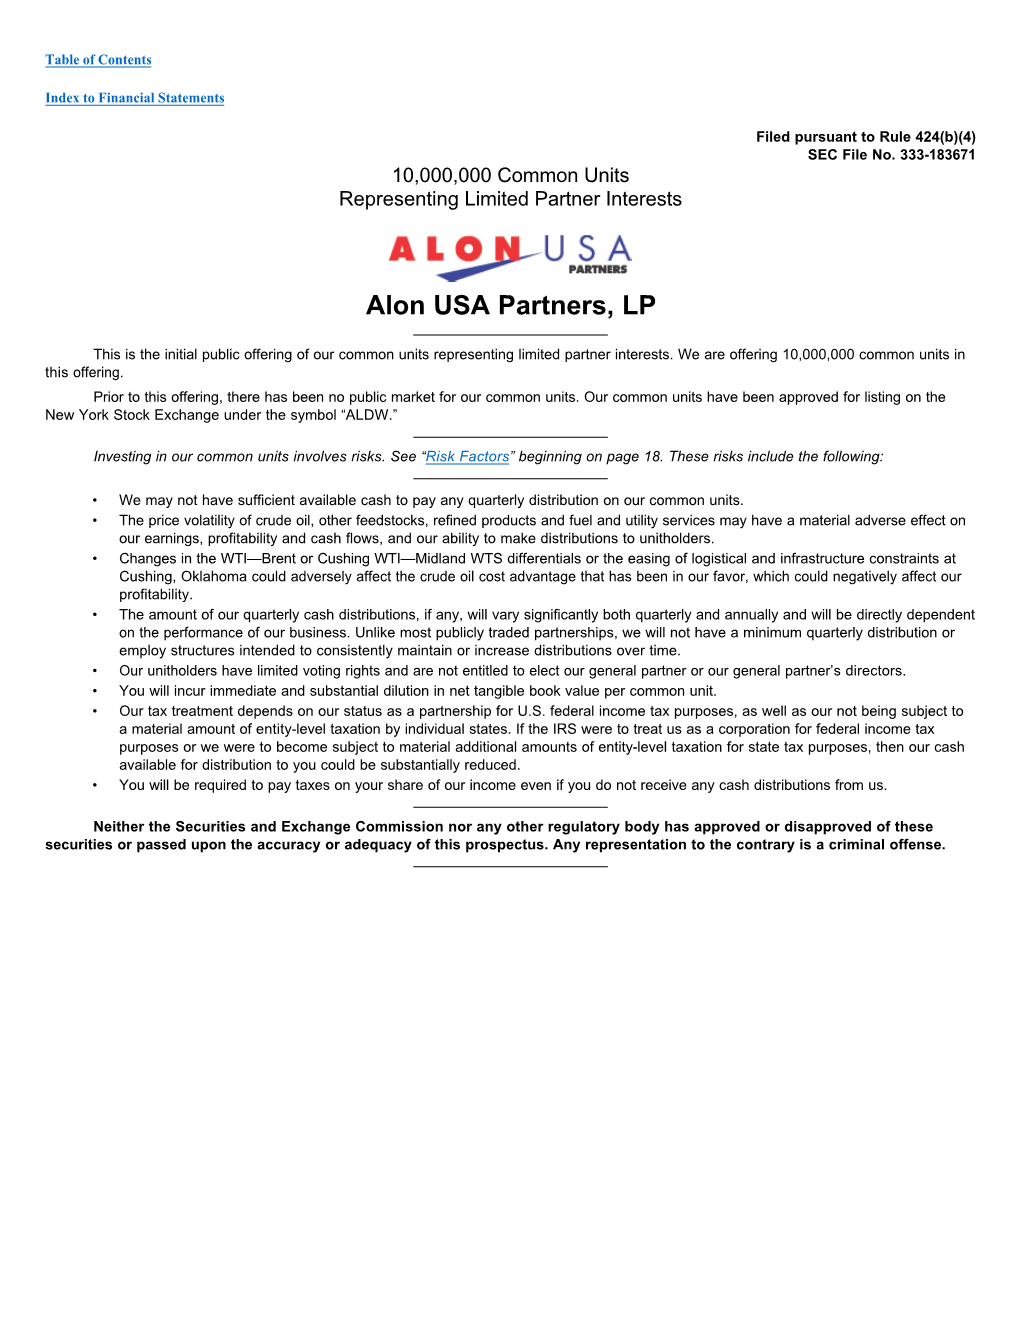 Alon USA Partners, LP